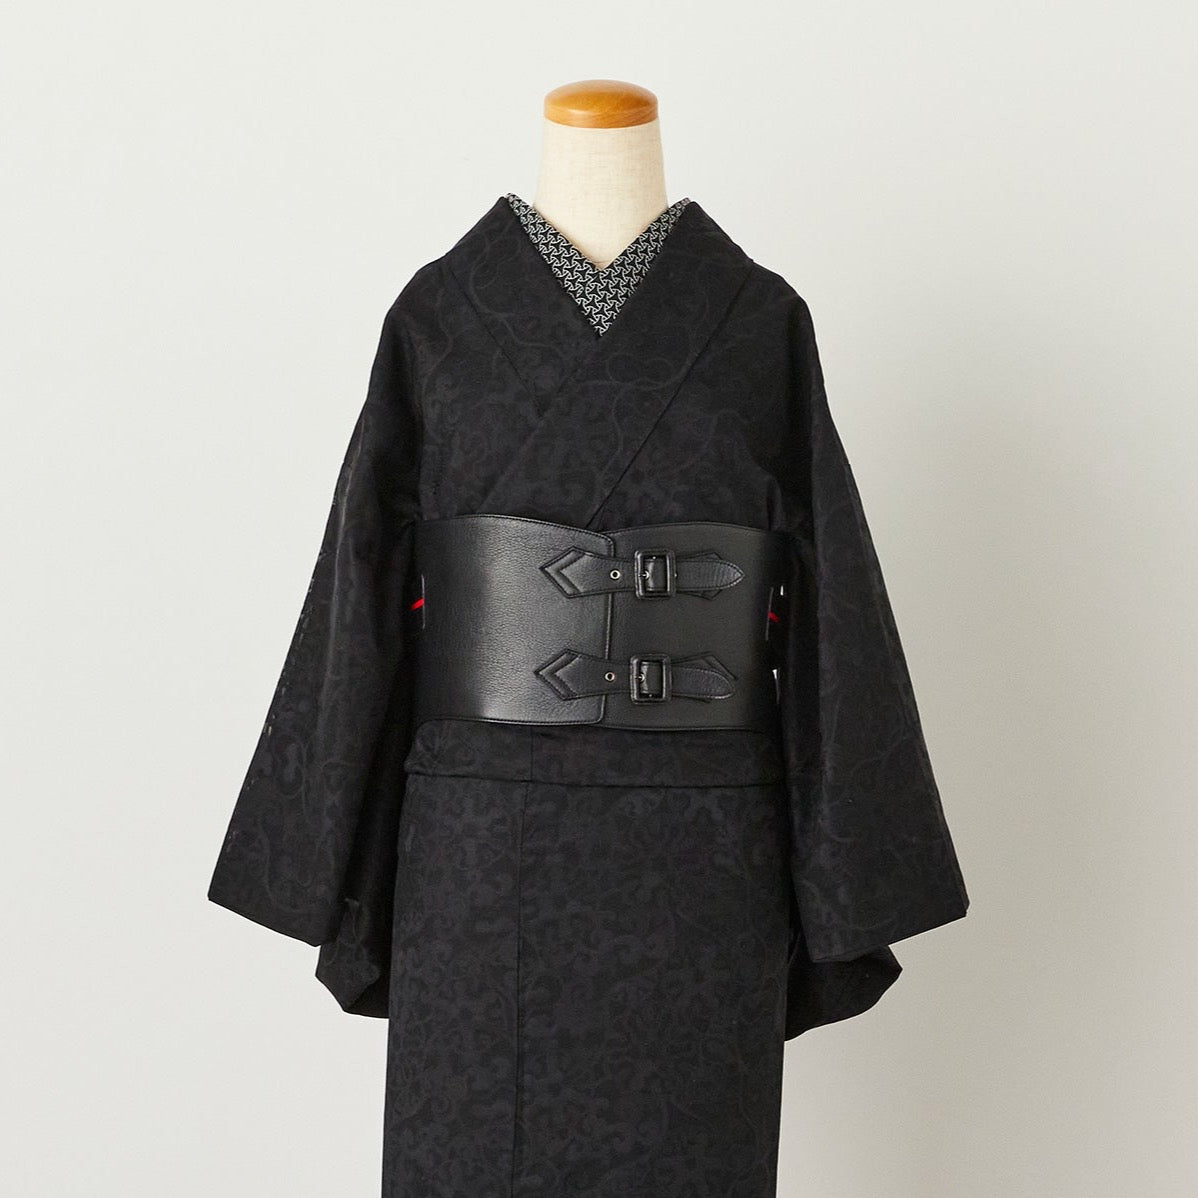 KAPUKI original half-collar "Kumiwaza" black/white